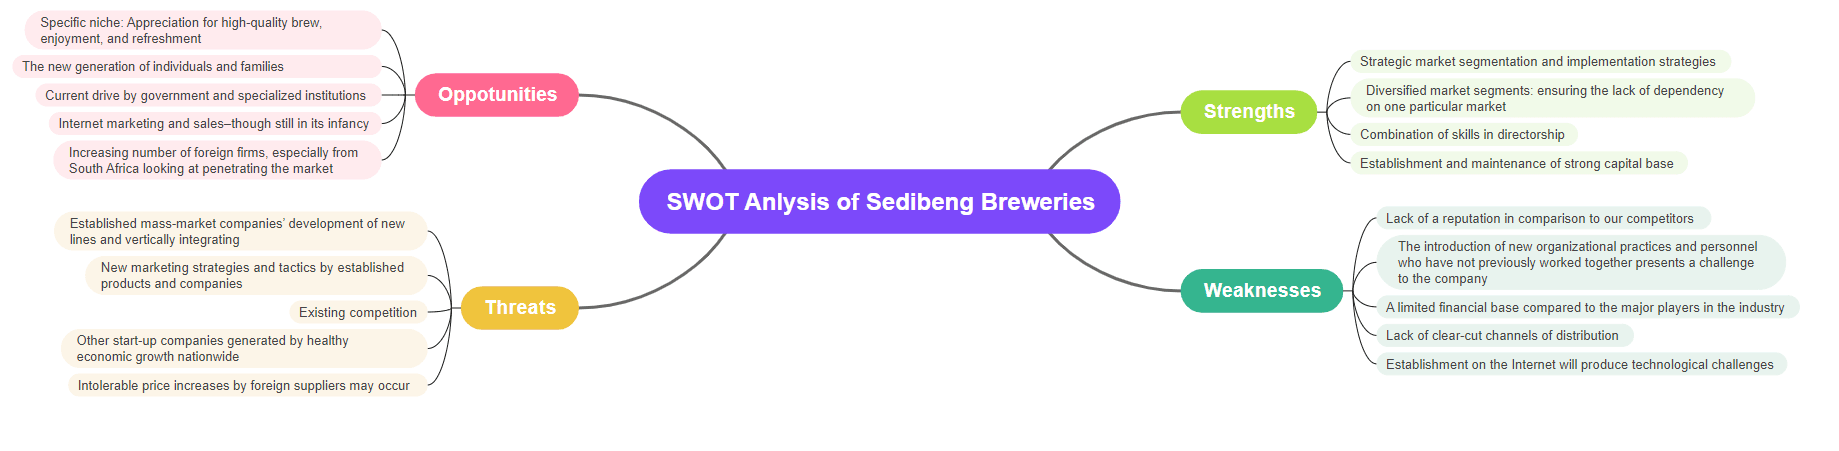 SWOT Analysis of Sedibeng Breweries